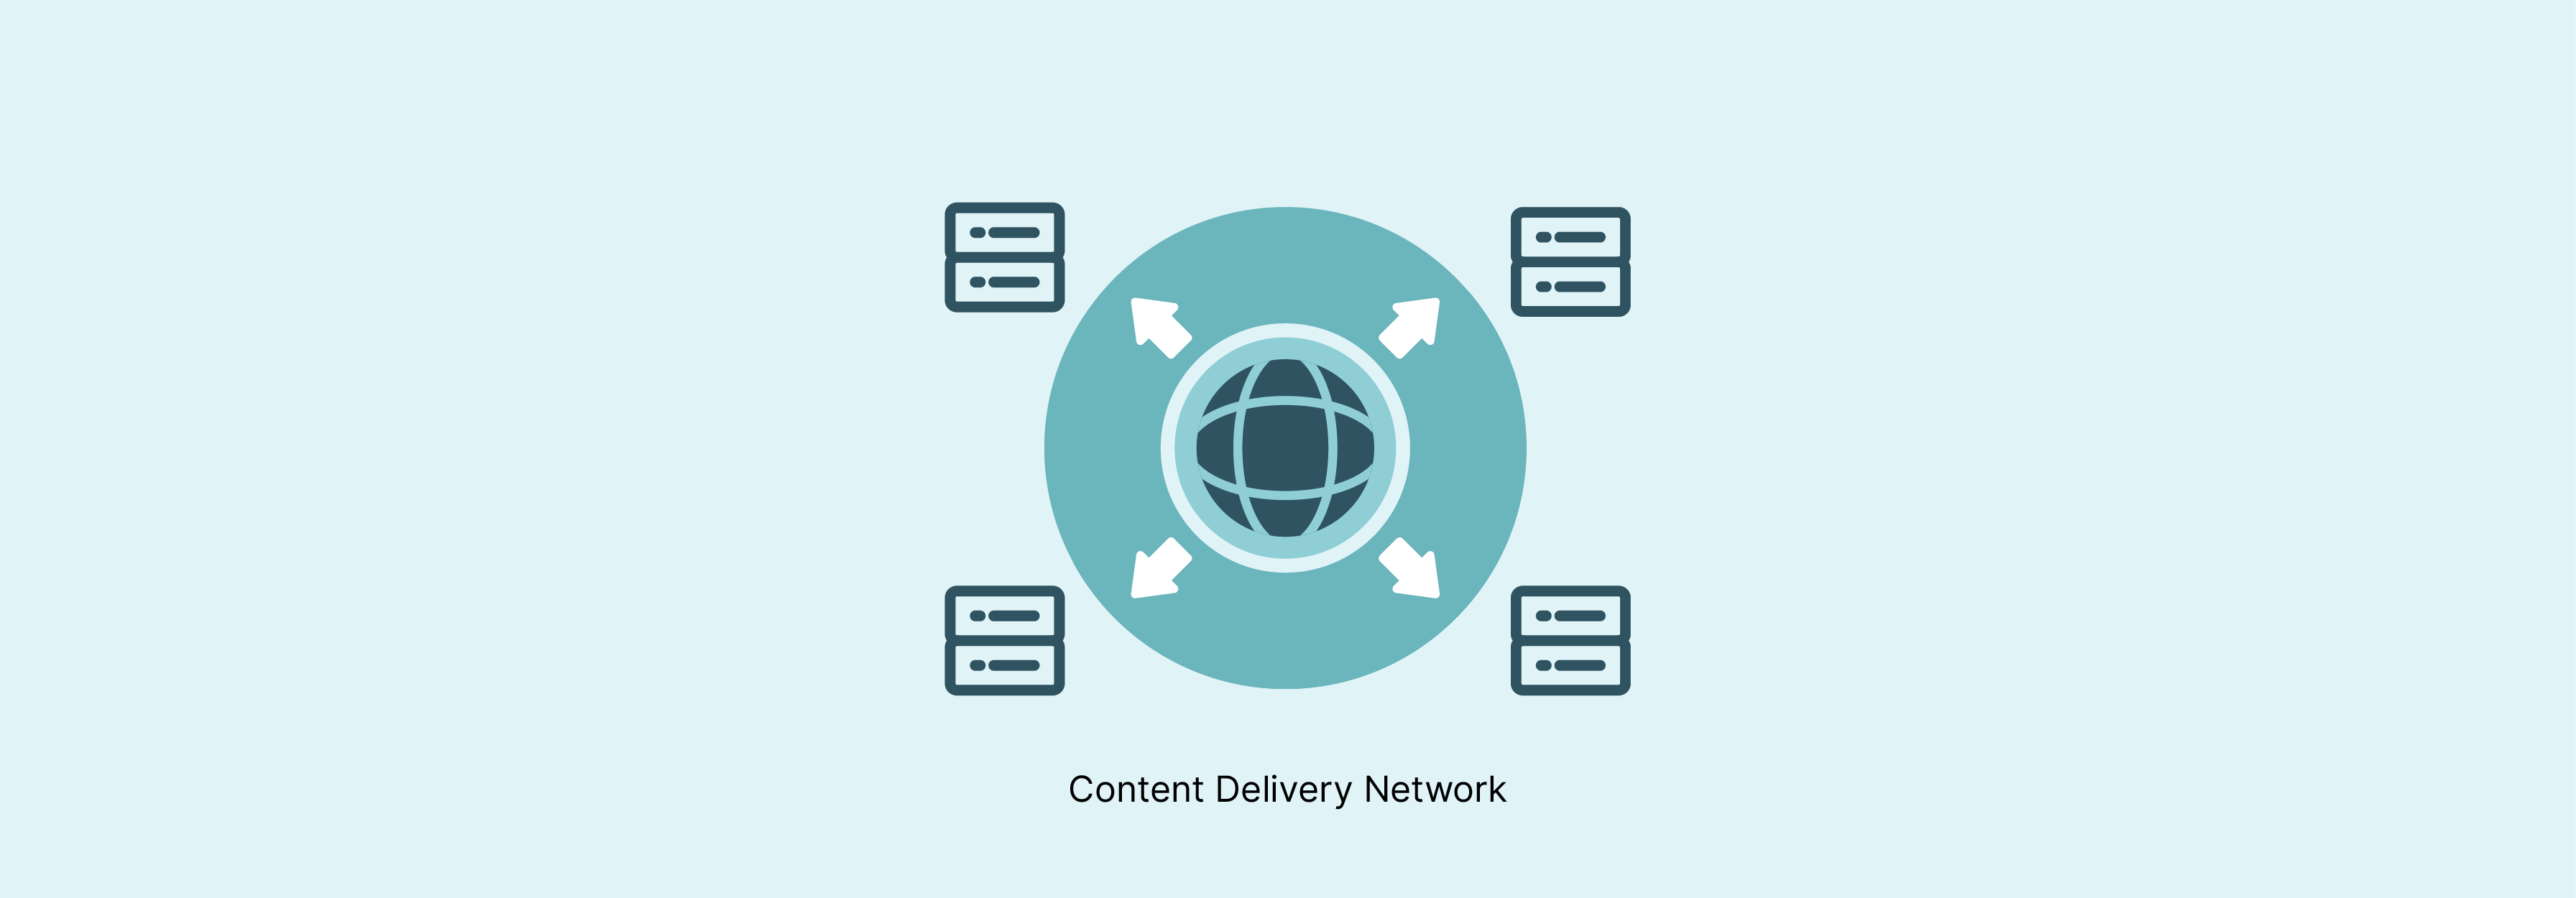 Global CDN network illustration for Magento 2 web hosting efficiency